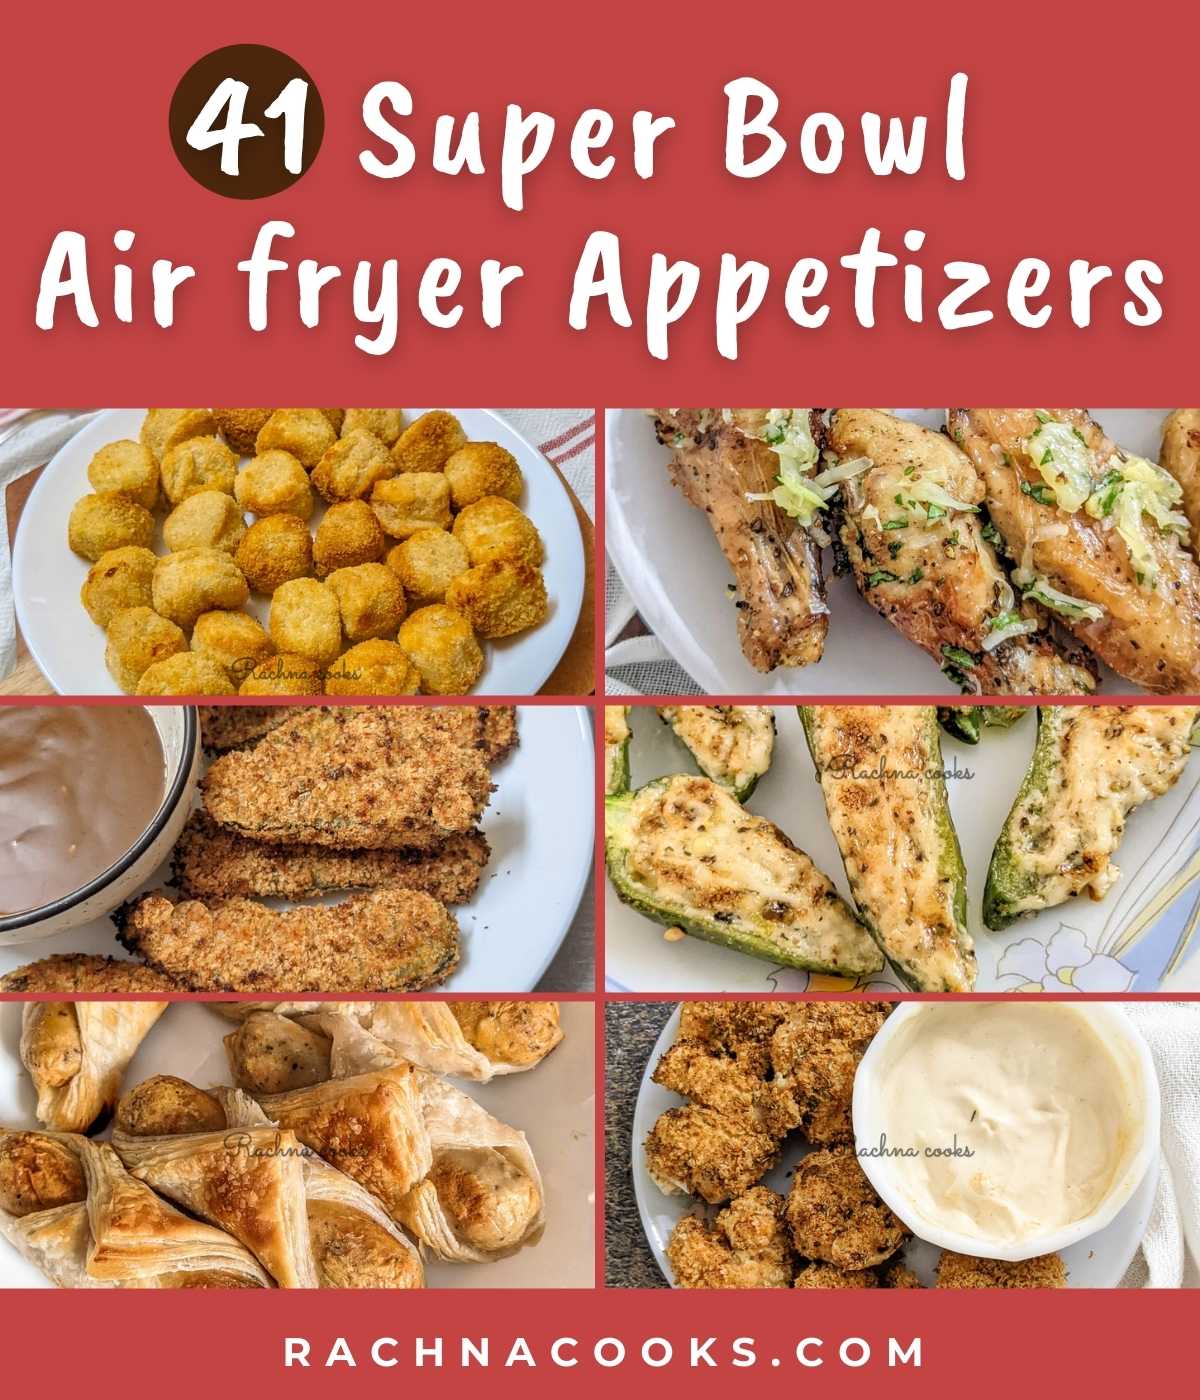 15 Air Fryer Appetizers & Snacks - Real Simple Good